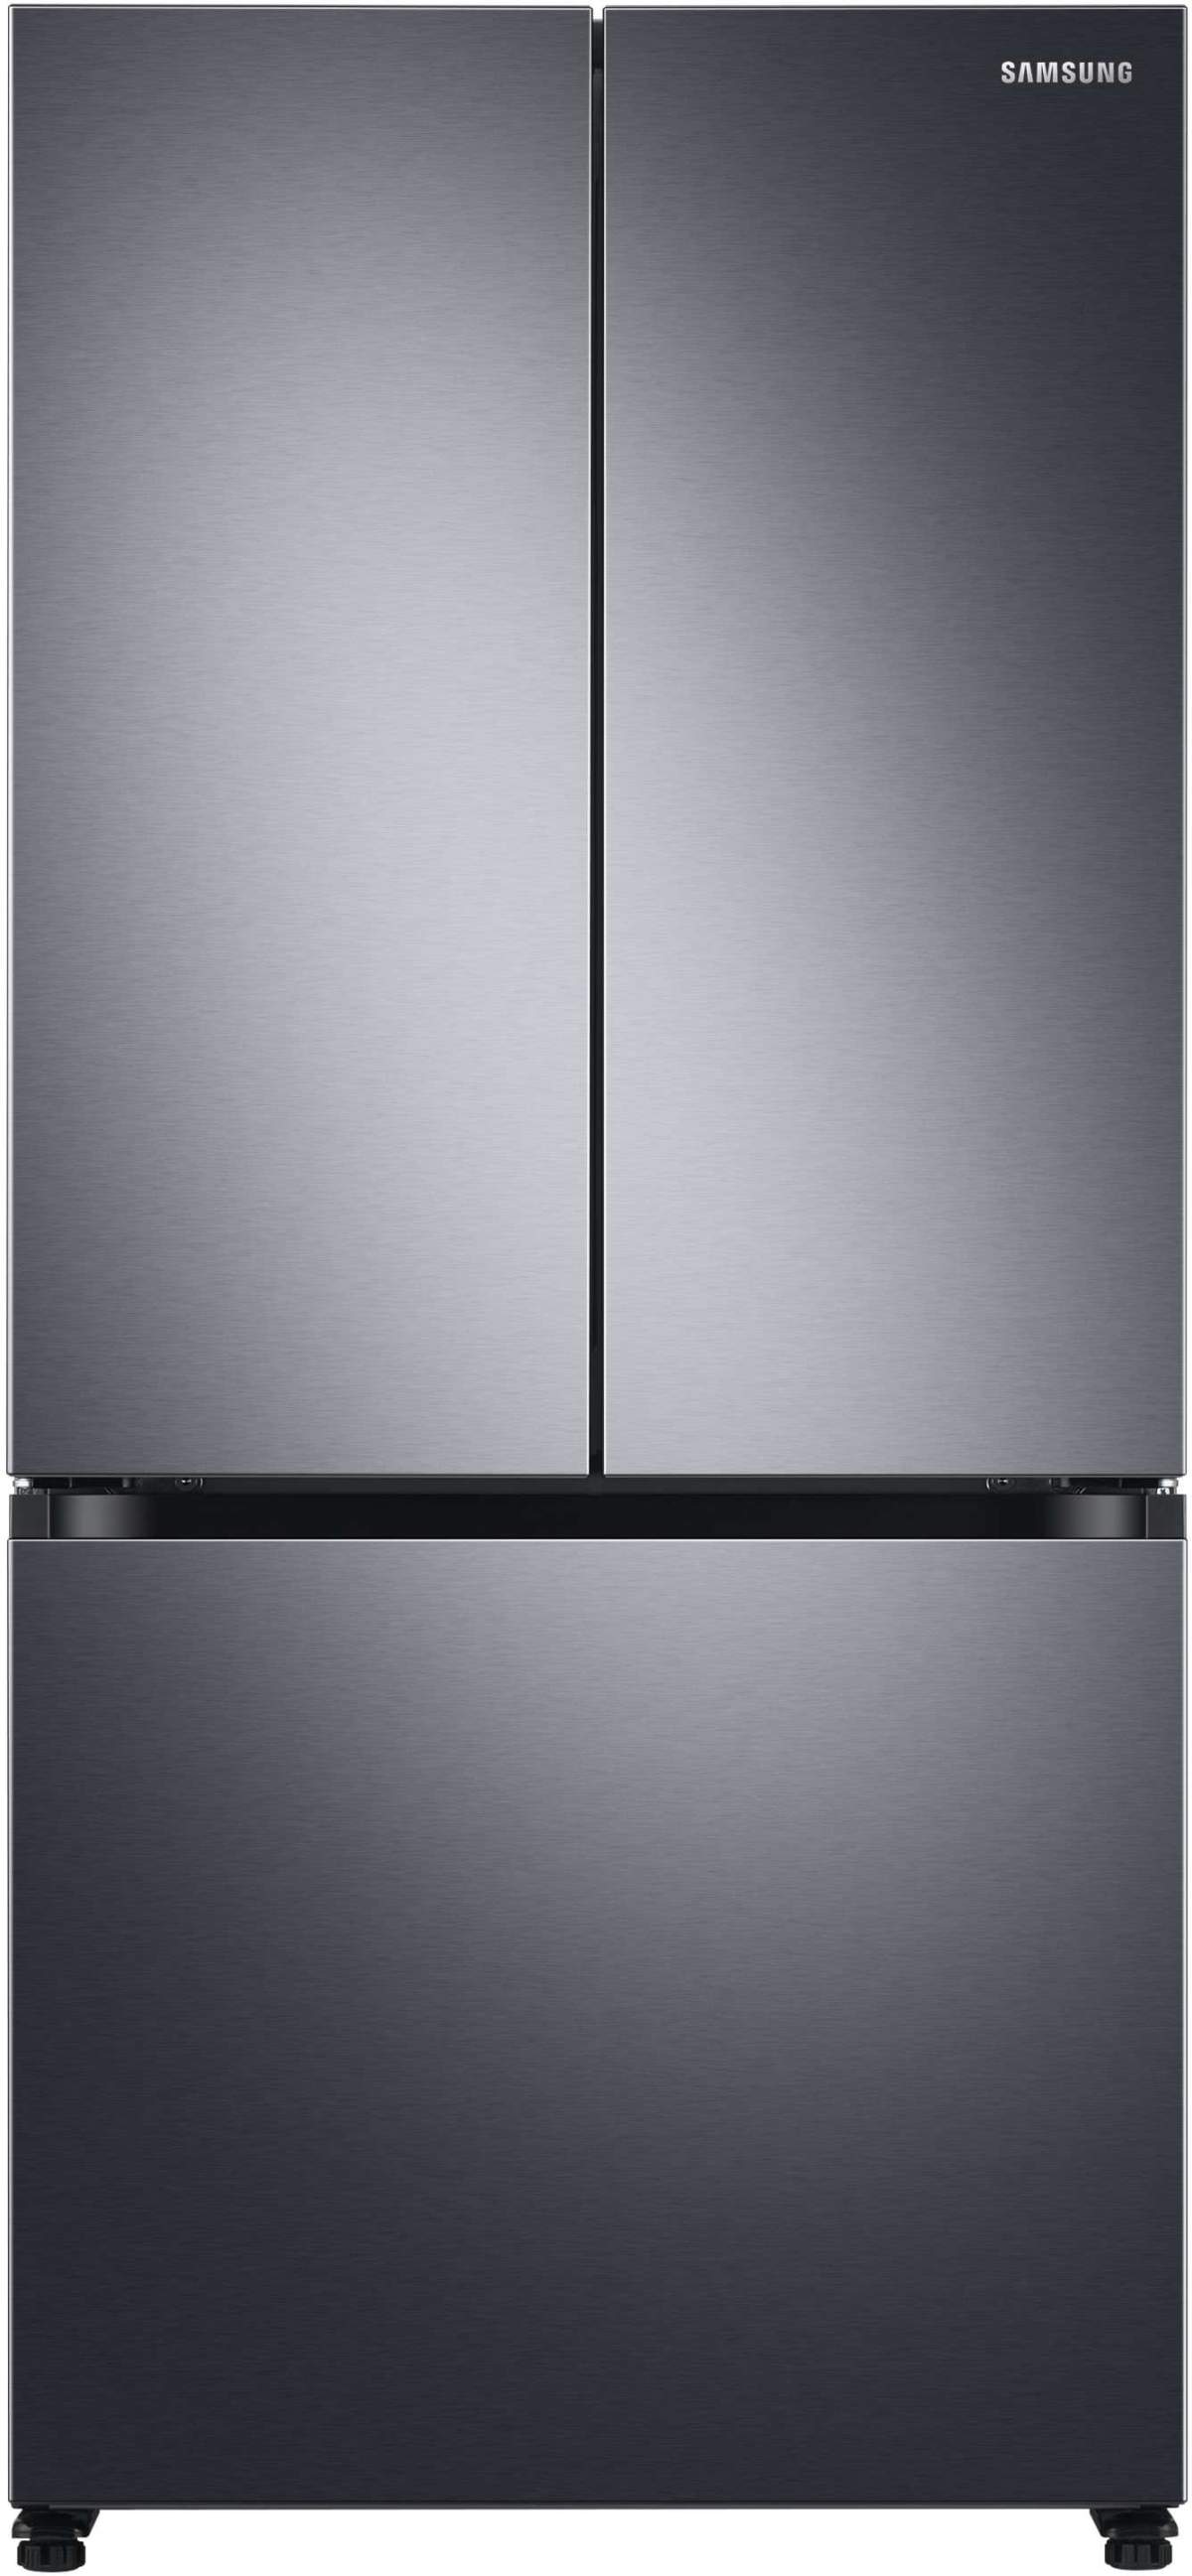 Samsung 17.5 Cu. Ft. Fingerprint Resistant Black Stainless Steel Counter Depth French Door Refrigerator